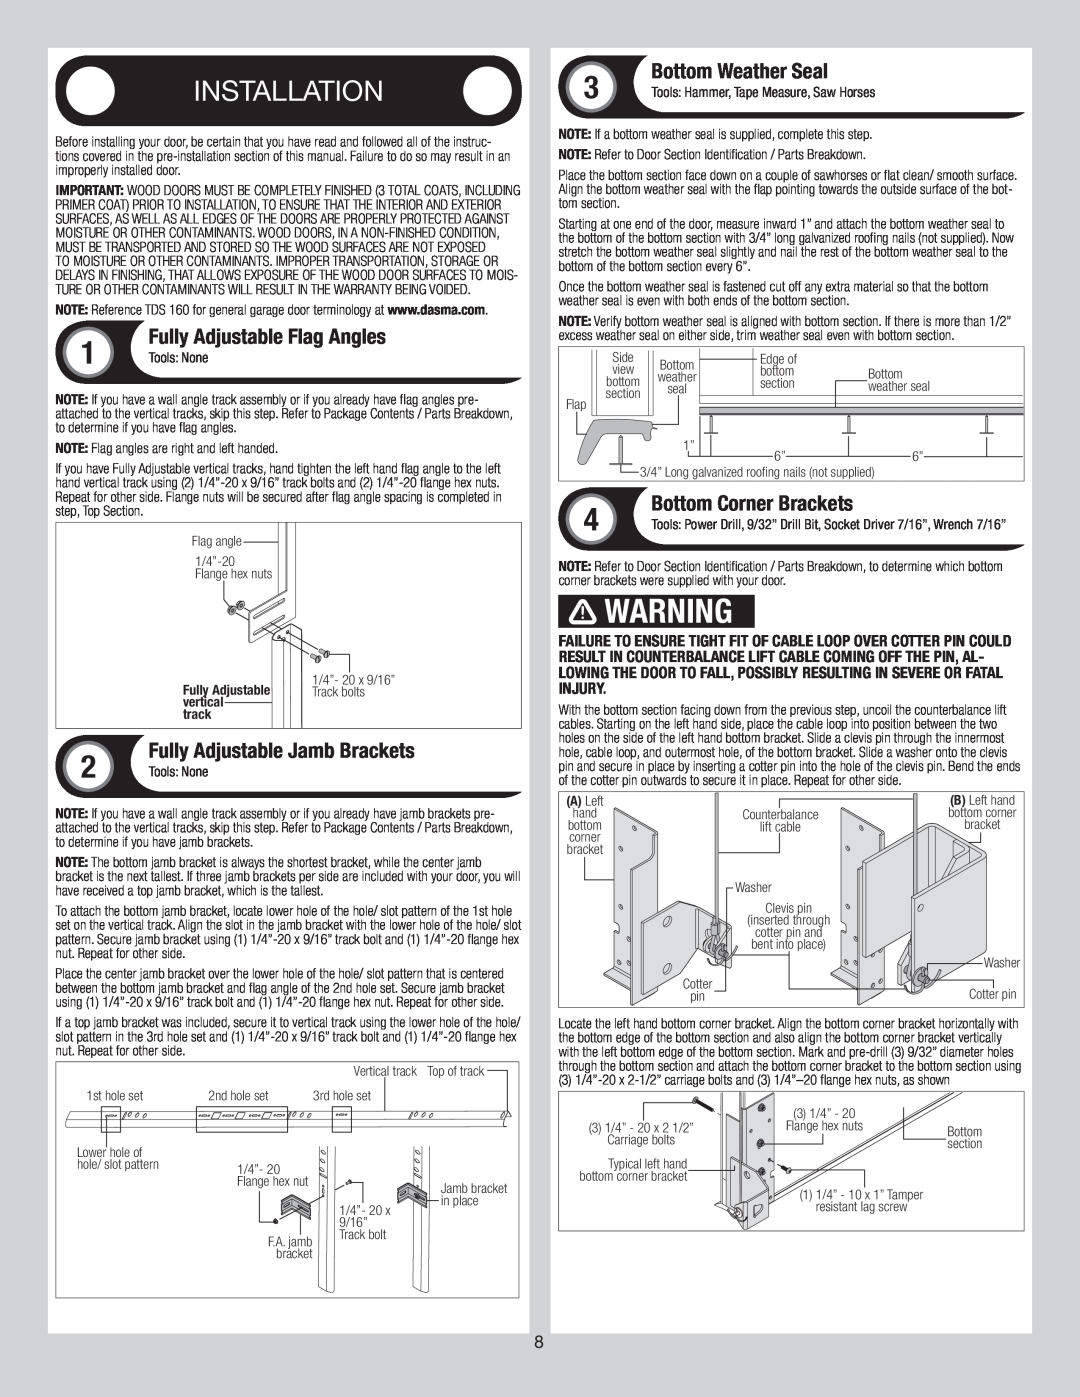 Wayne-Dalton 44 installation instructions 